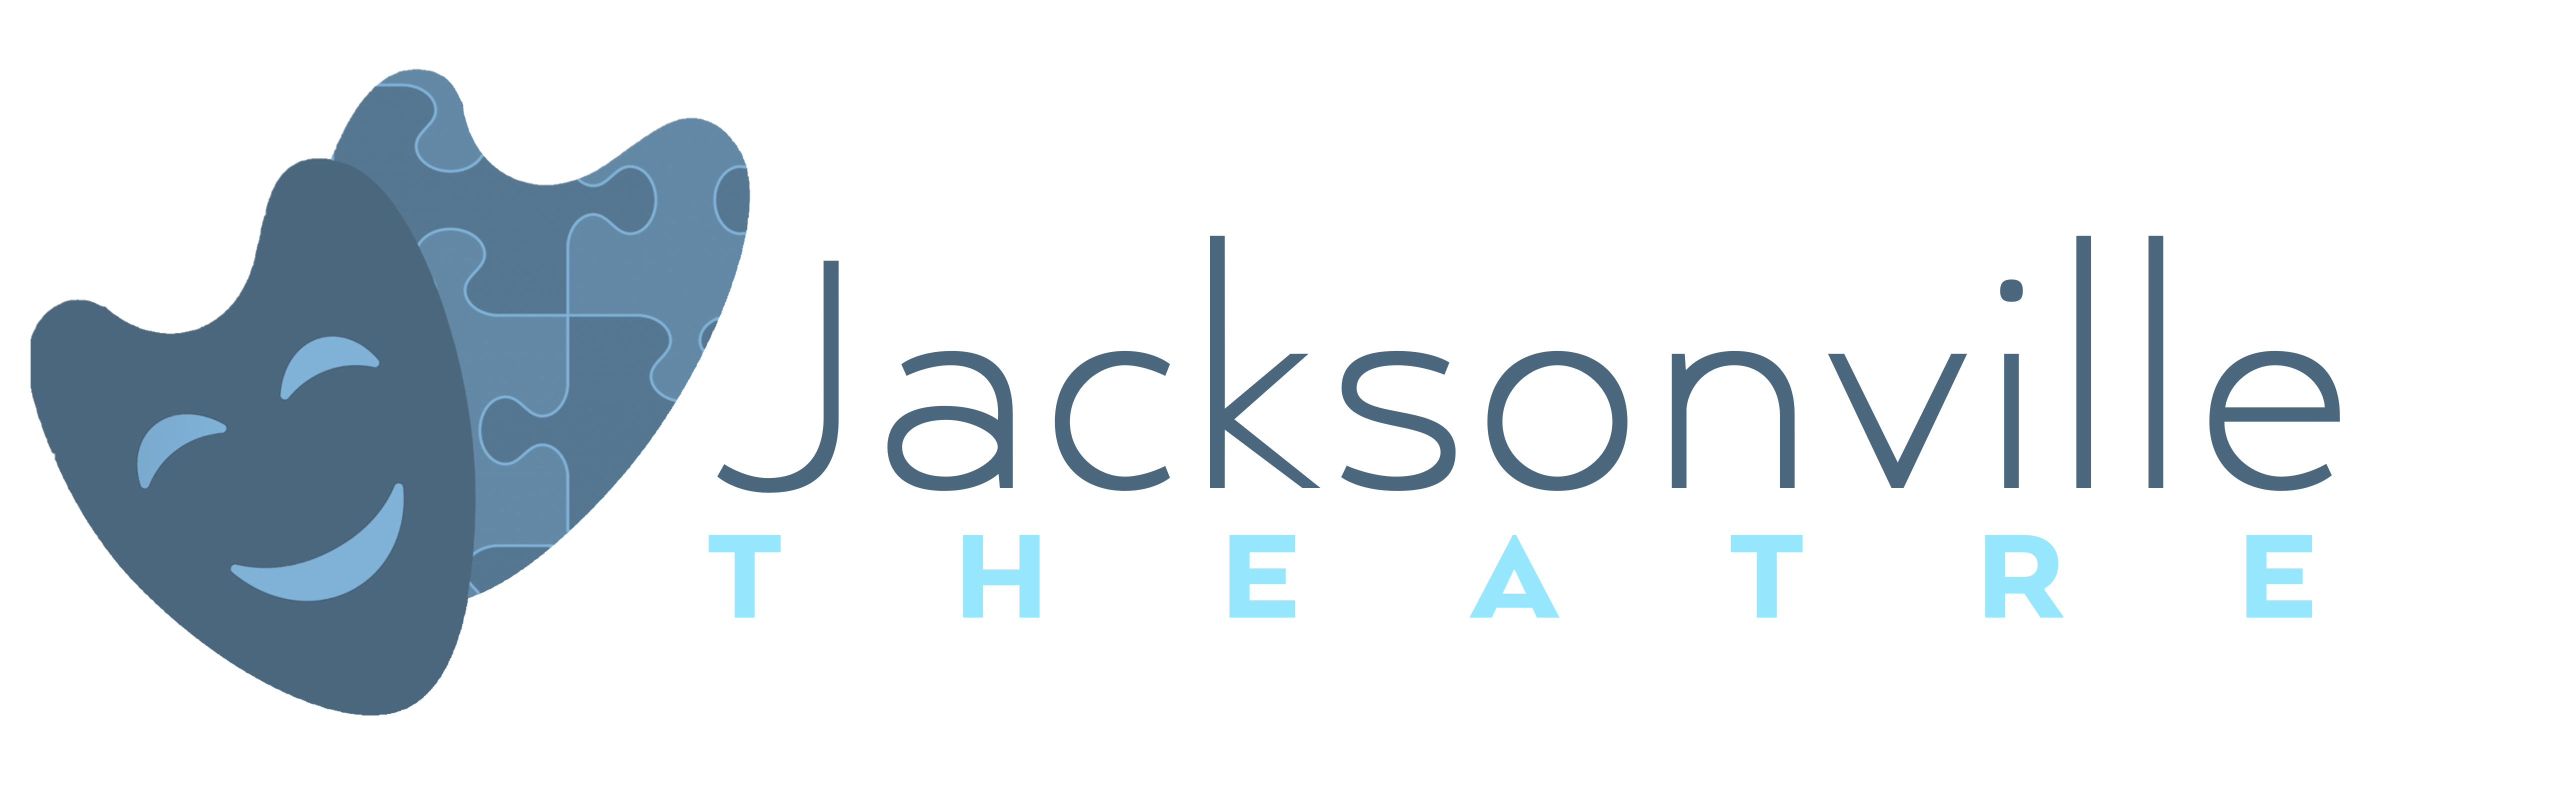 The Jacksonville Theatre logo